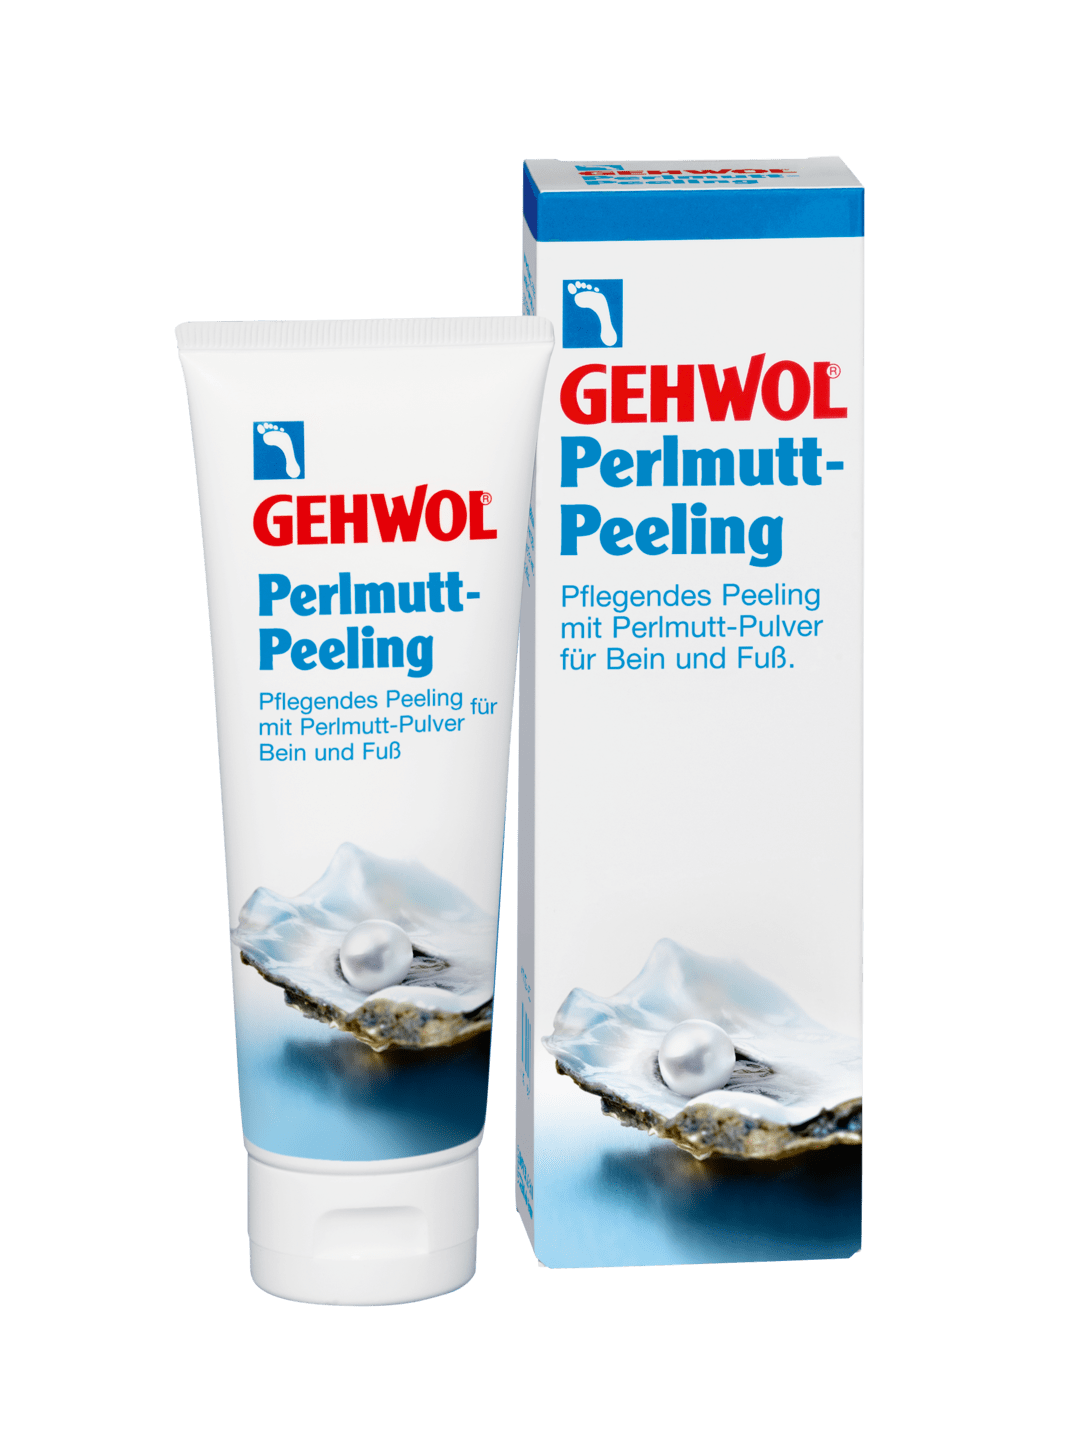 GEHWOL - Perlmutt-Peeling